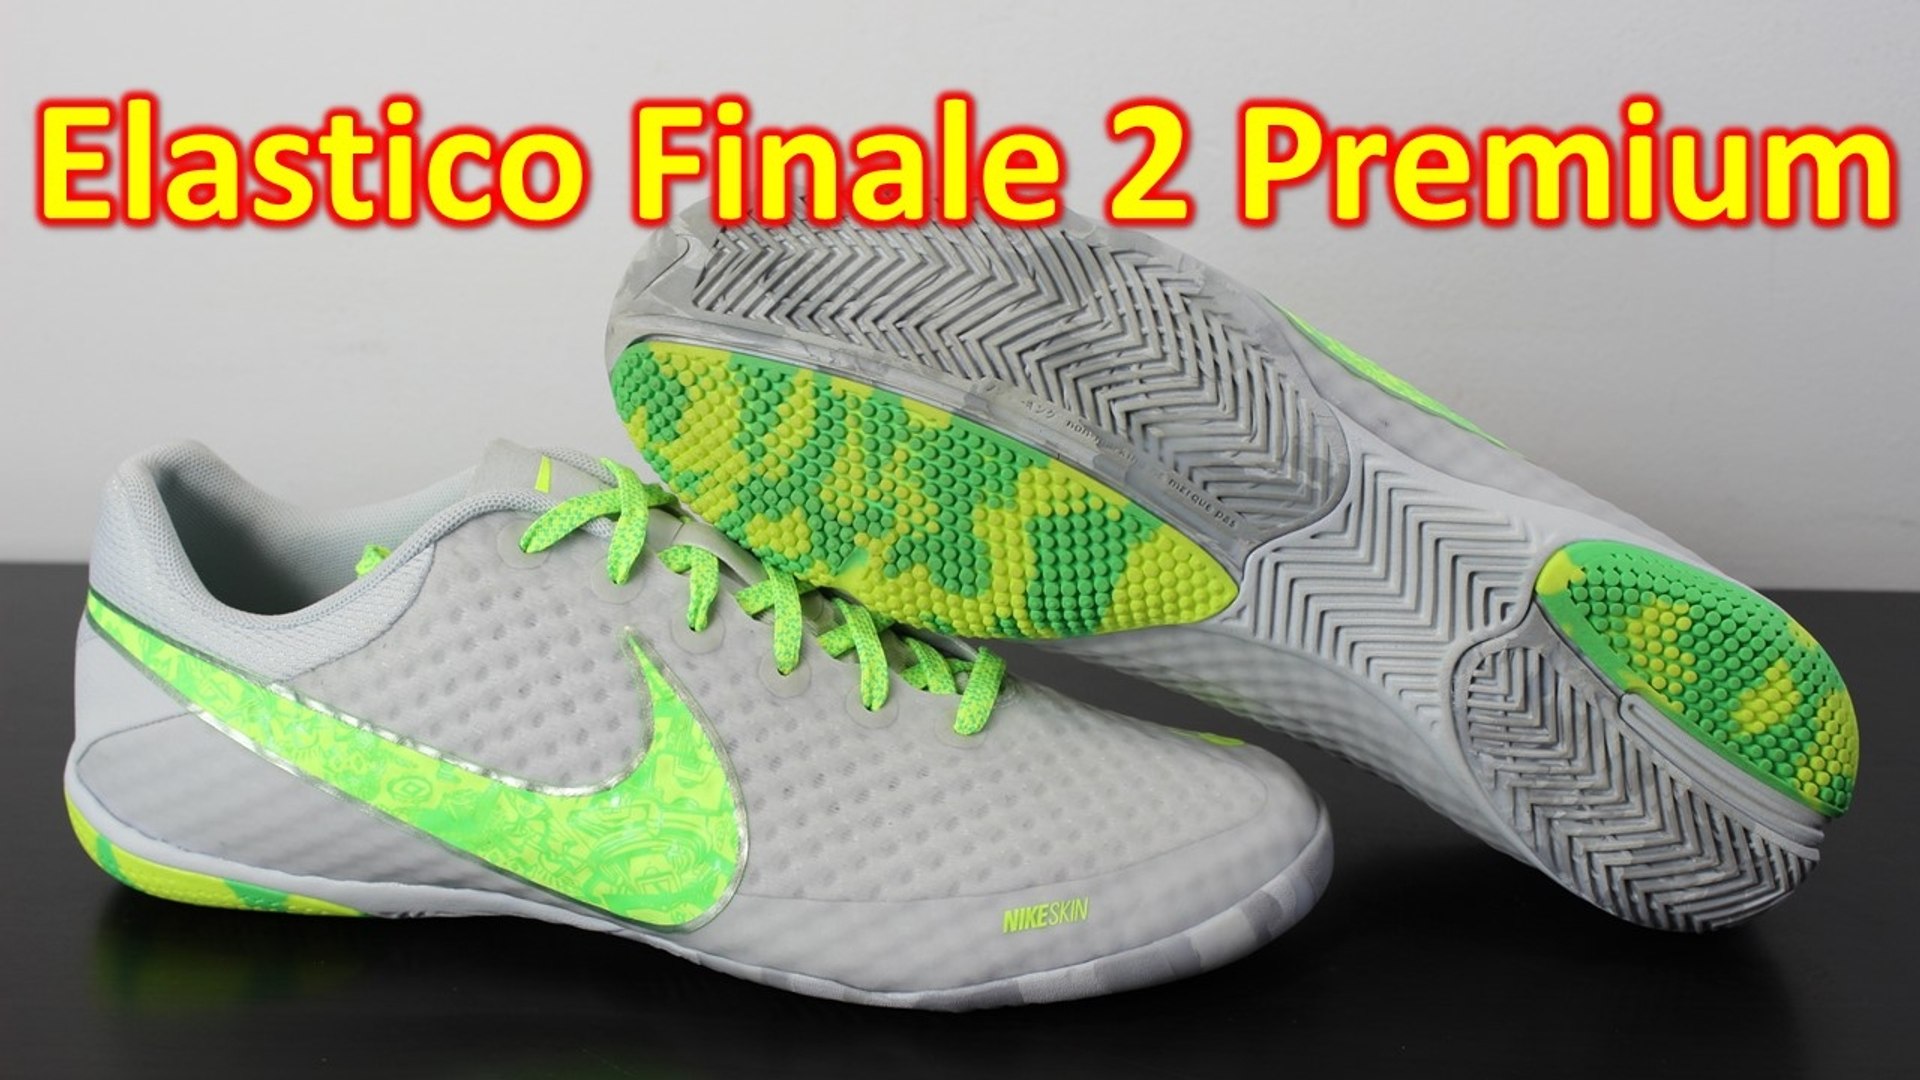 Nike Elastico Finale 2 Premium Pure Platinum Unboxing & Review - video  Dailymotion